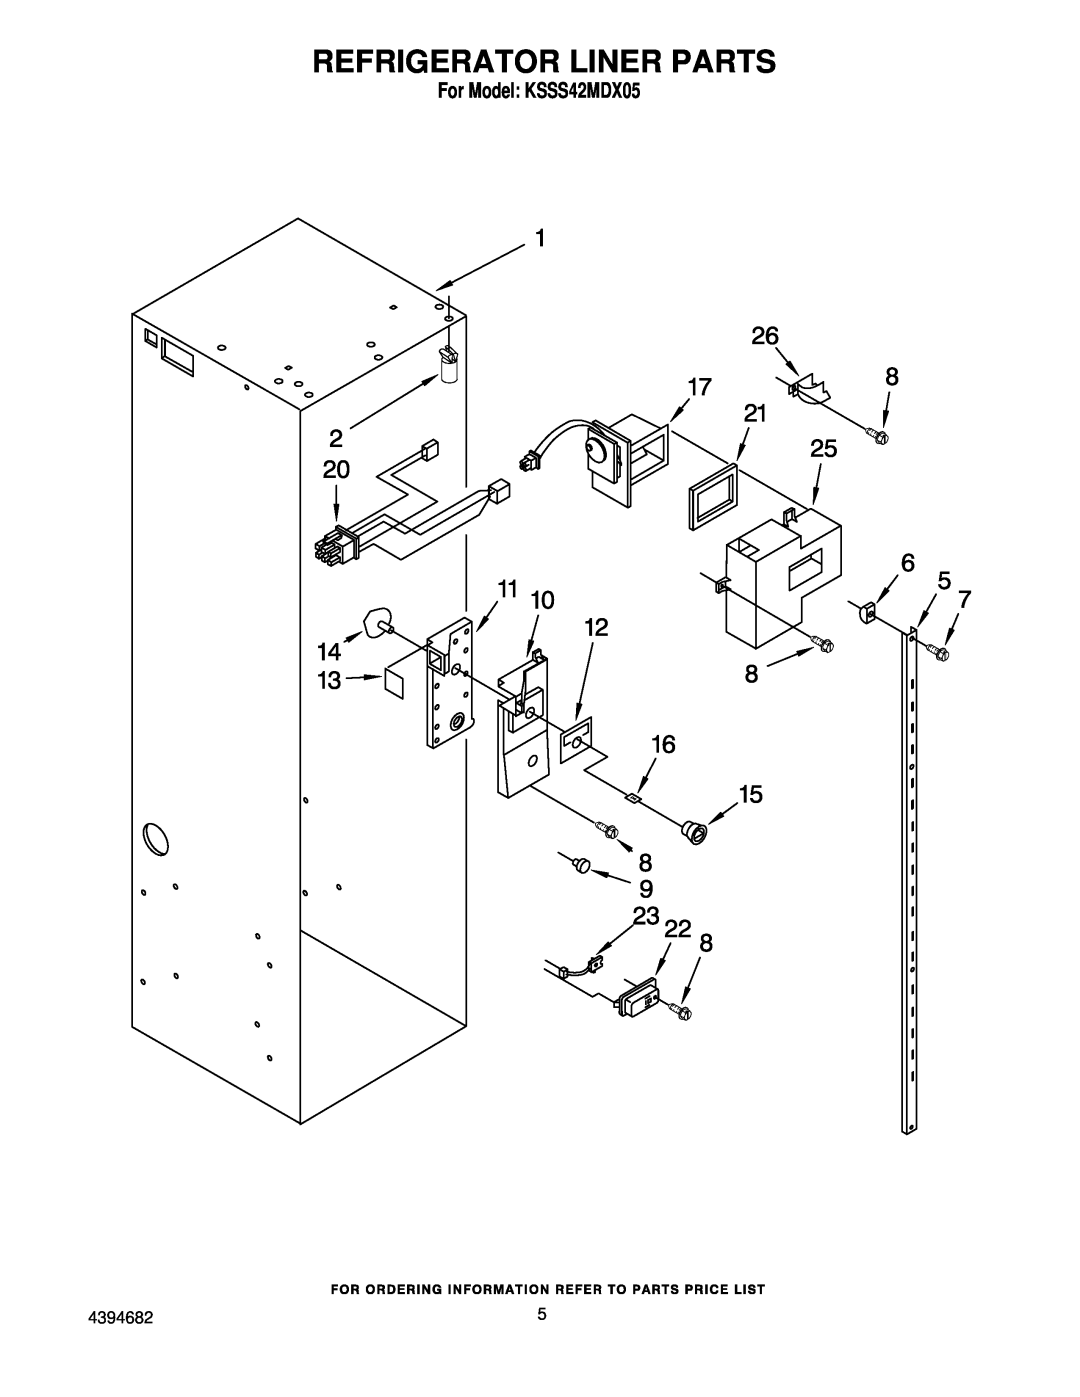 KitchenAid manual Refrigerator Liner Parts, For Model KSSS42MDX05 